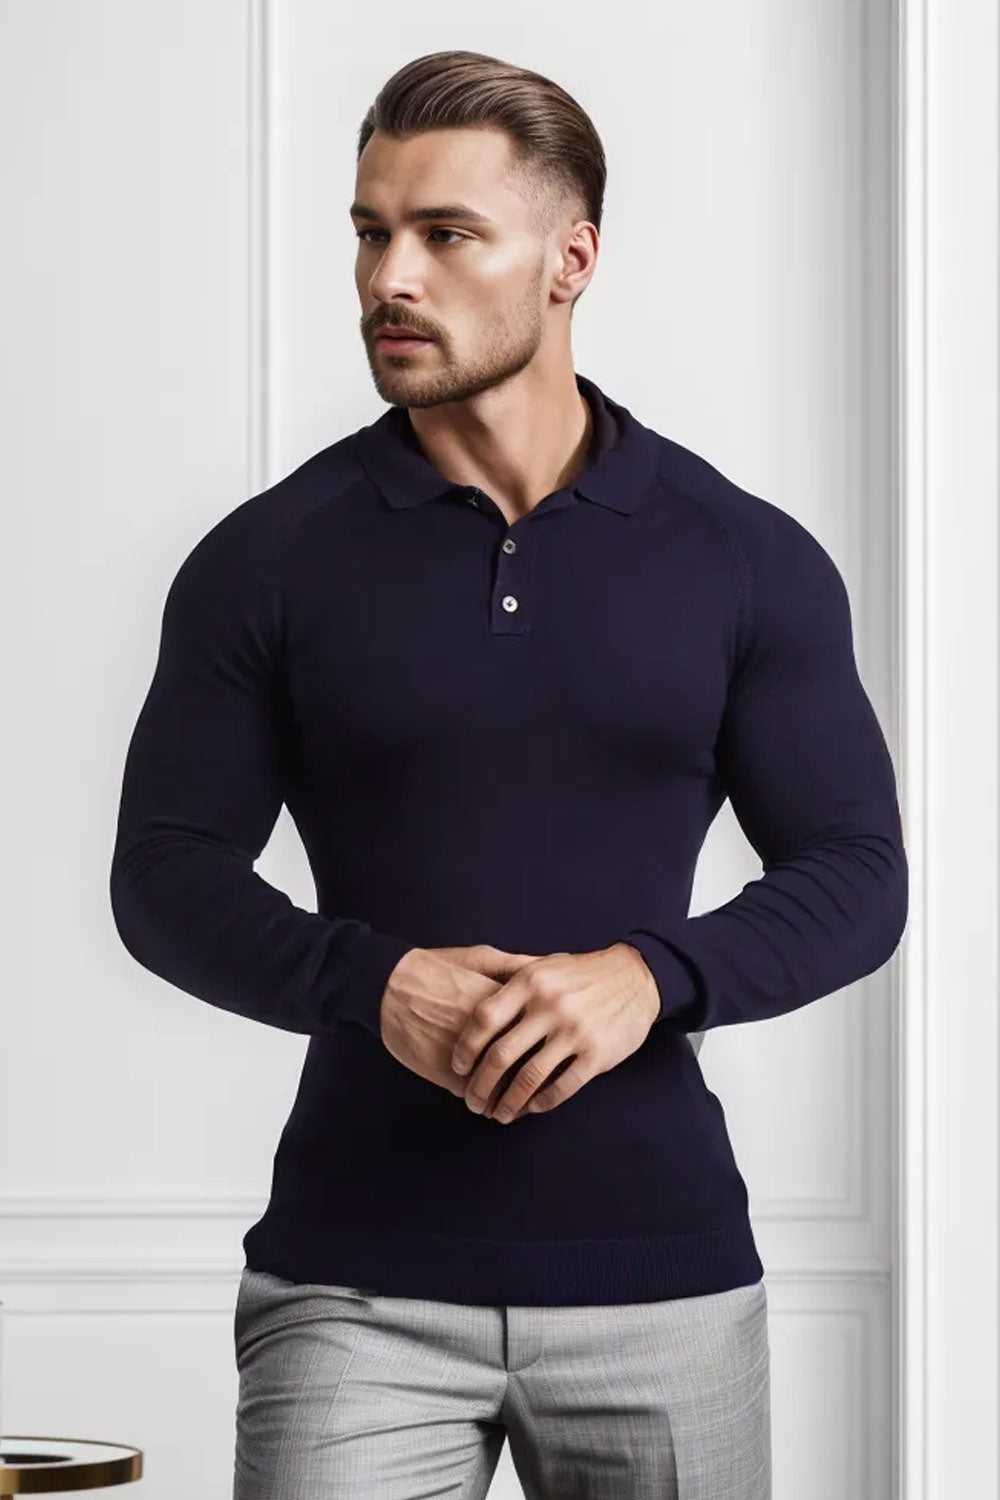 men's dark blue slim fit polo shirts